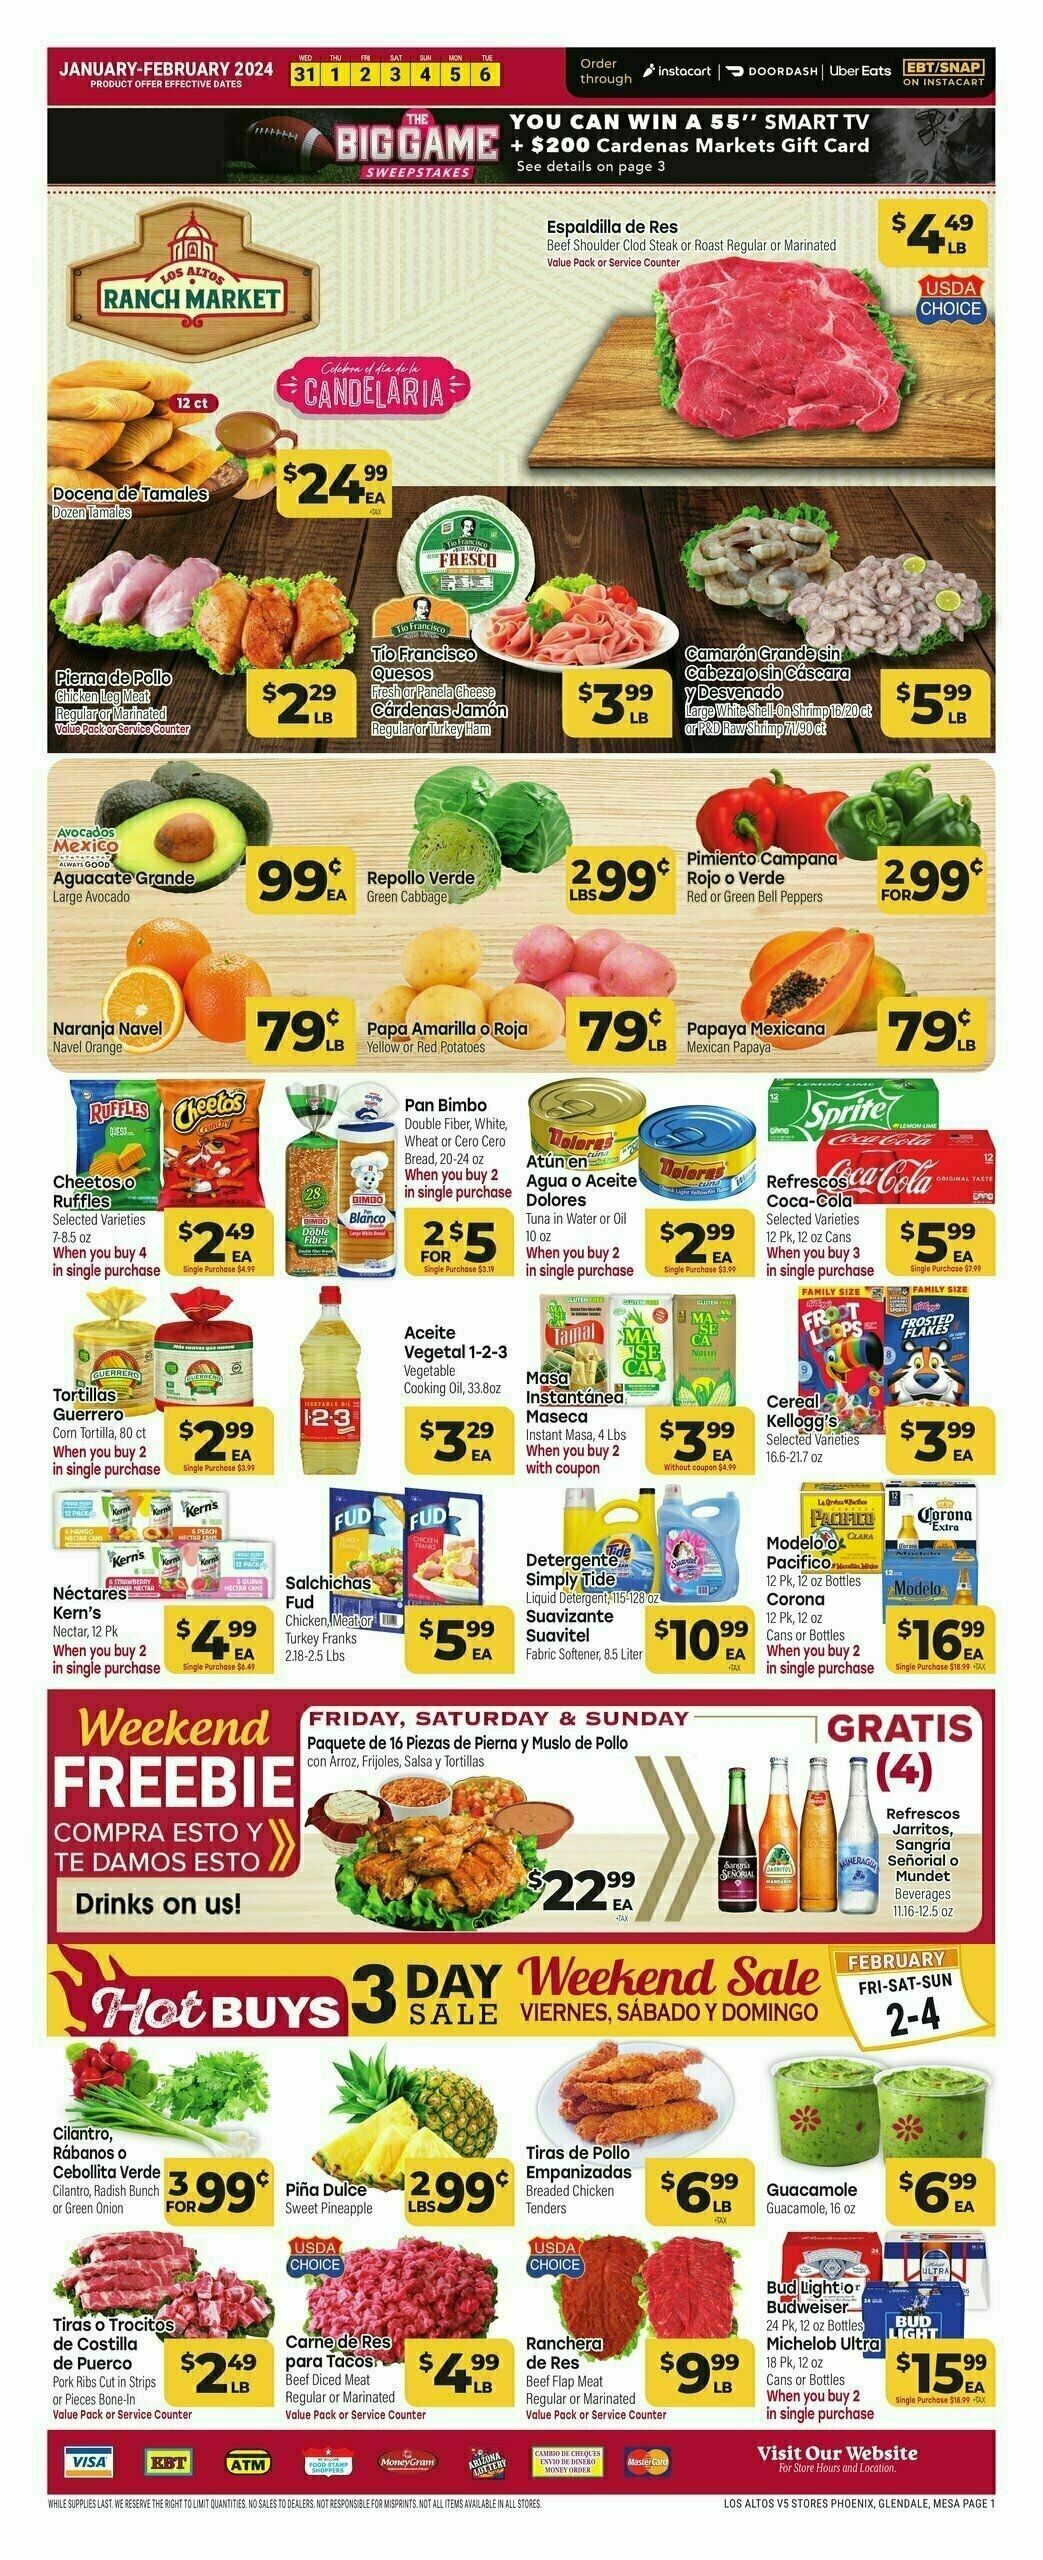 Cardenas Market Weekly Ad from January 31